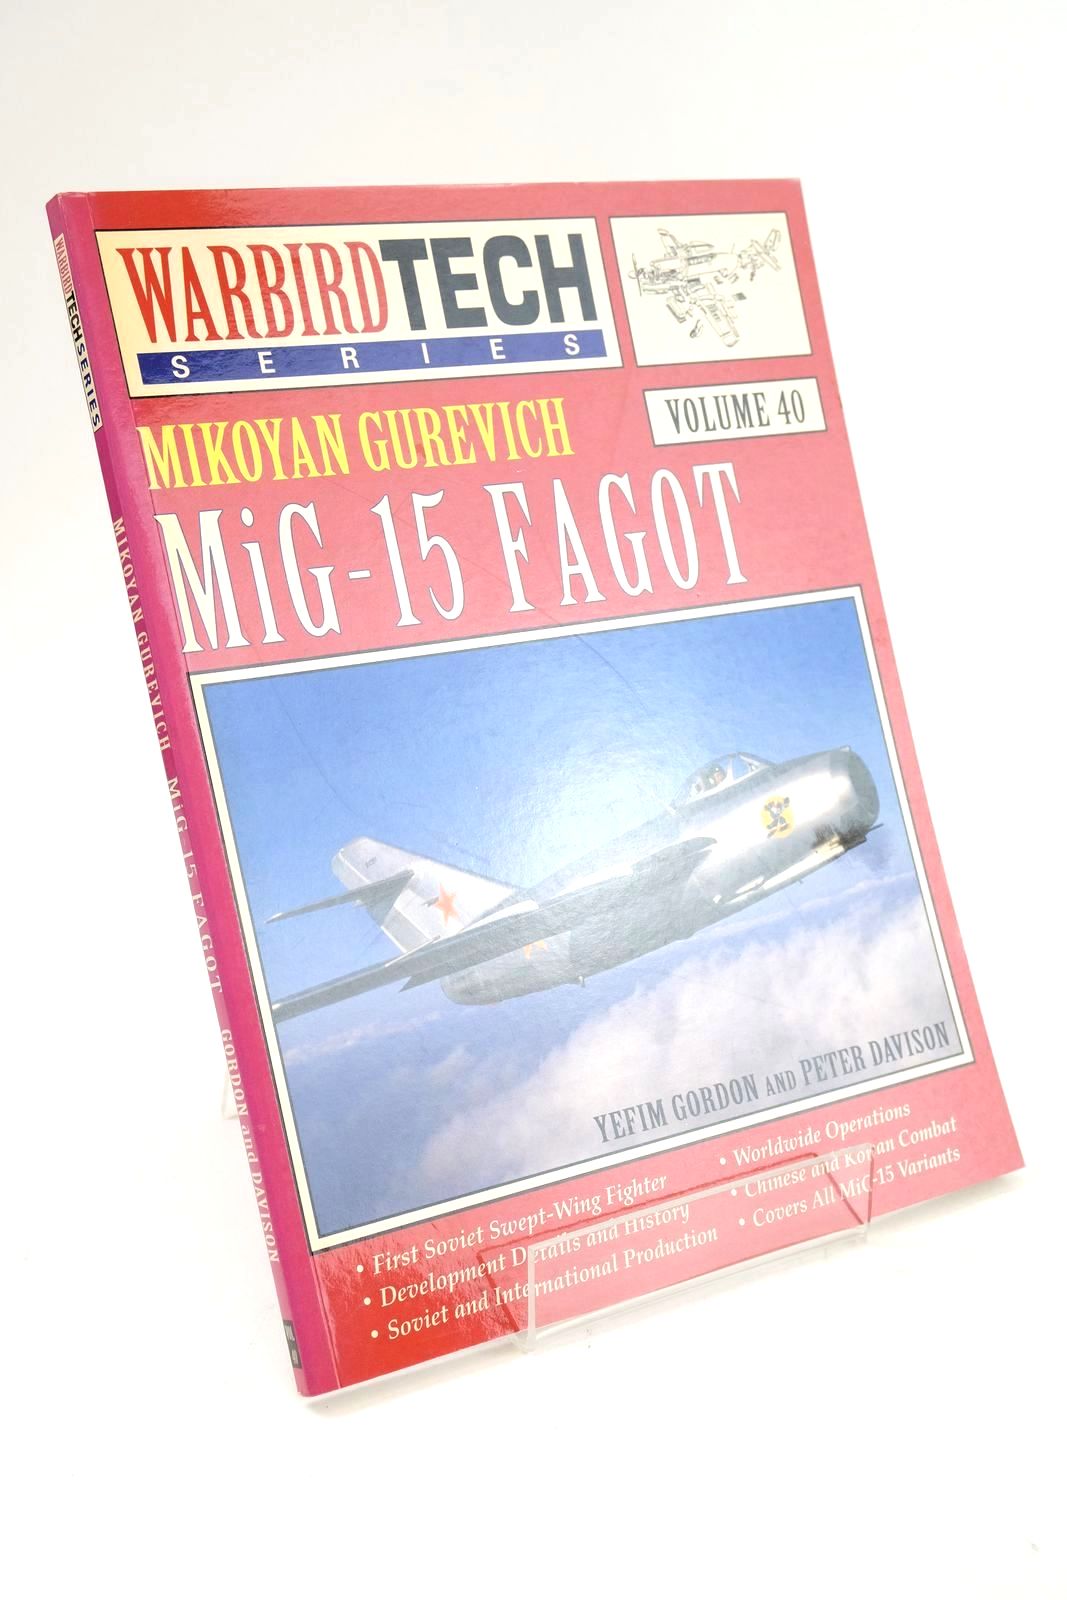 Photo of WARBIRD TECH SERIES VOL 40: MIKOYAN GUREVICH MIG-15 FAGOT- Stock Number: 1325139